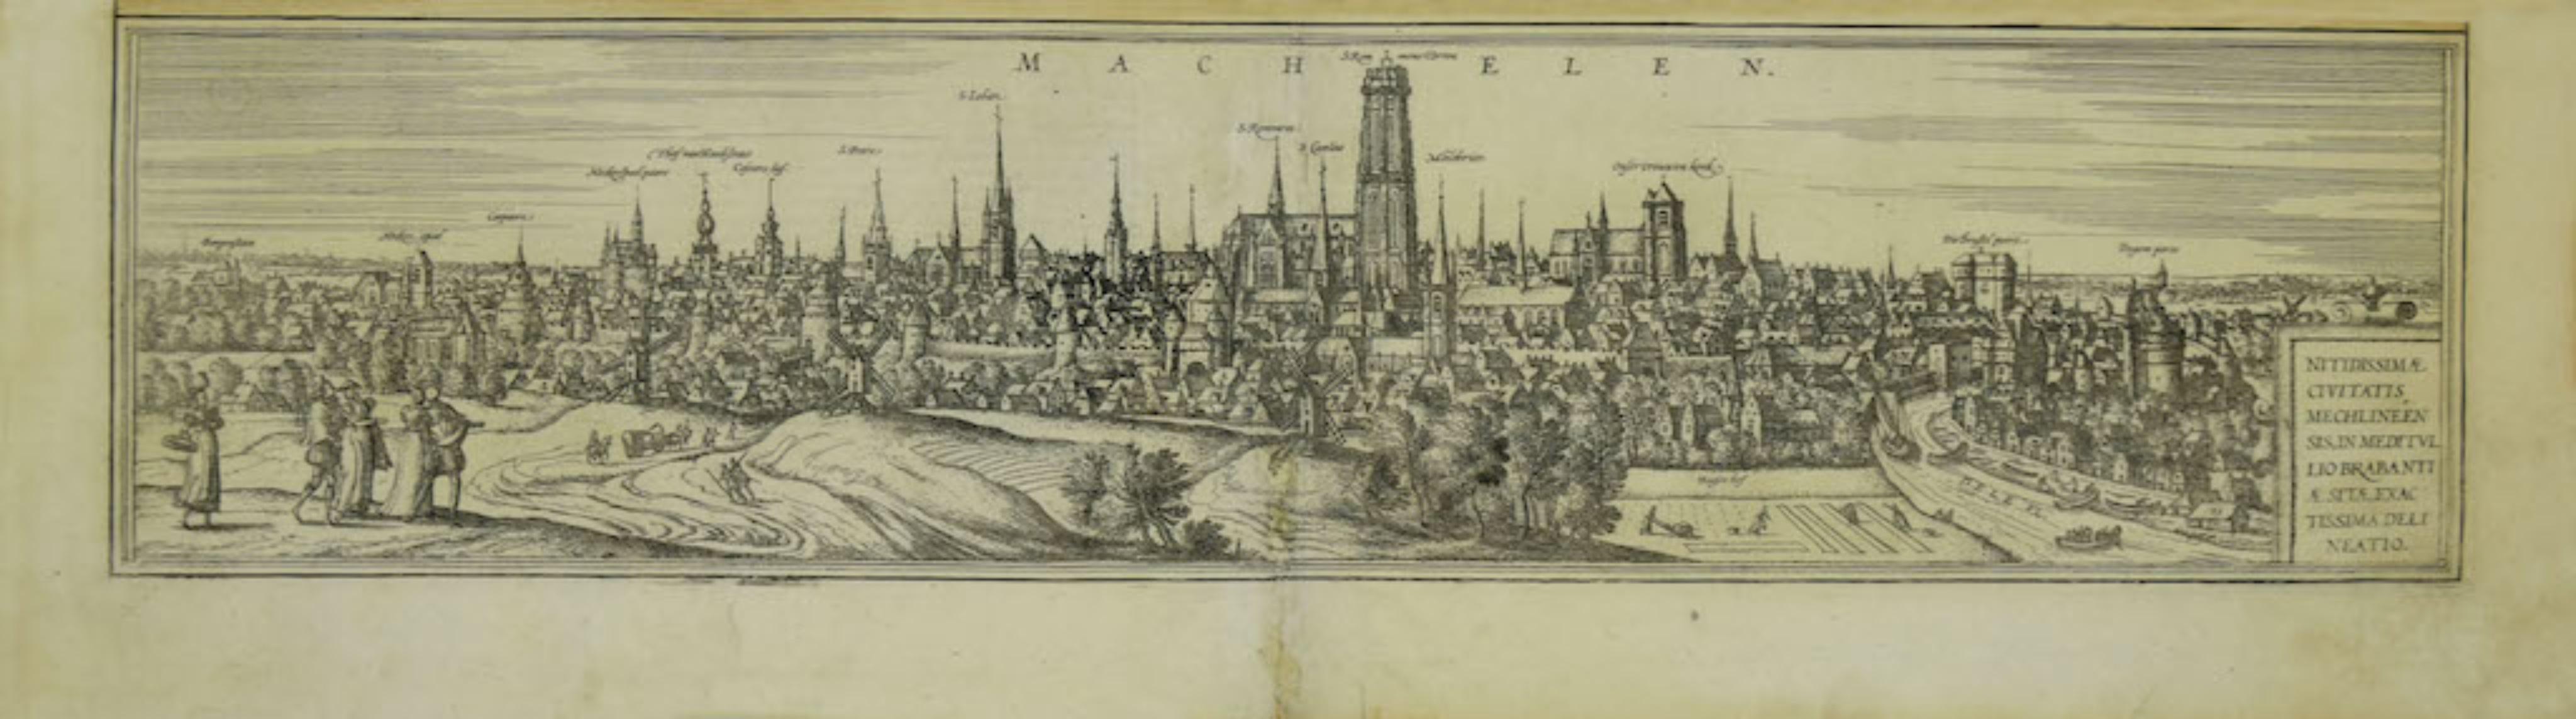 Frans Hogenberg Landscape Print - View of Mechelen - Original Etching by G. Braun and F. Hogenberg - 16th Century